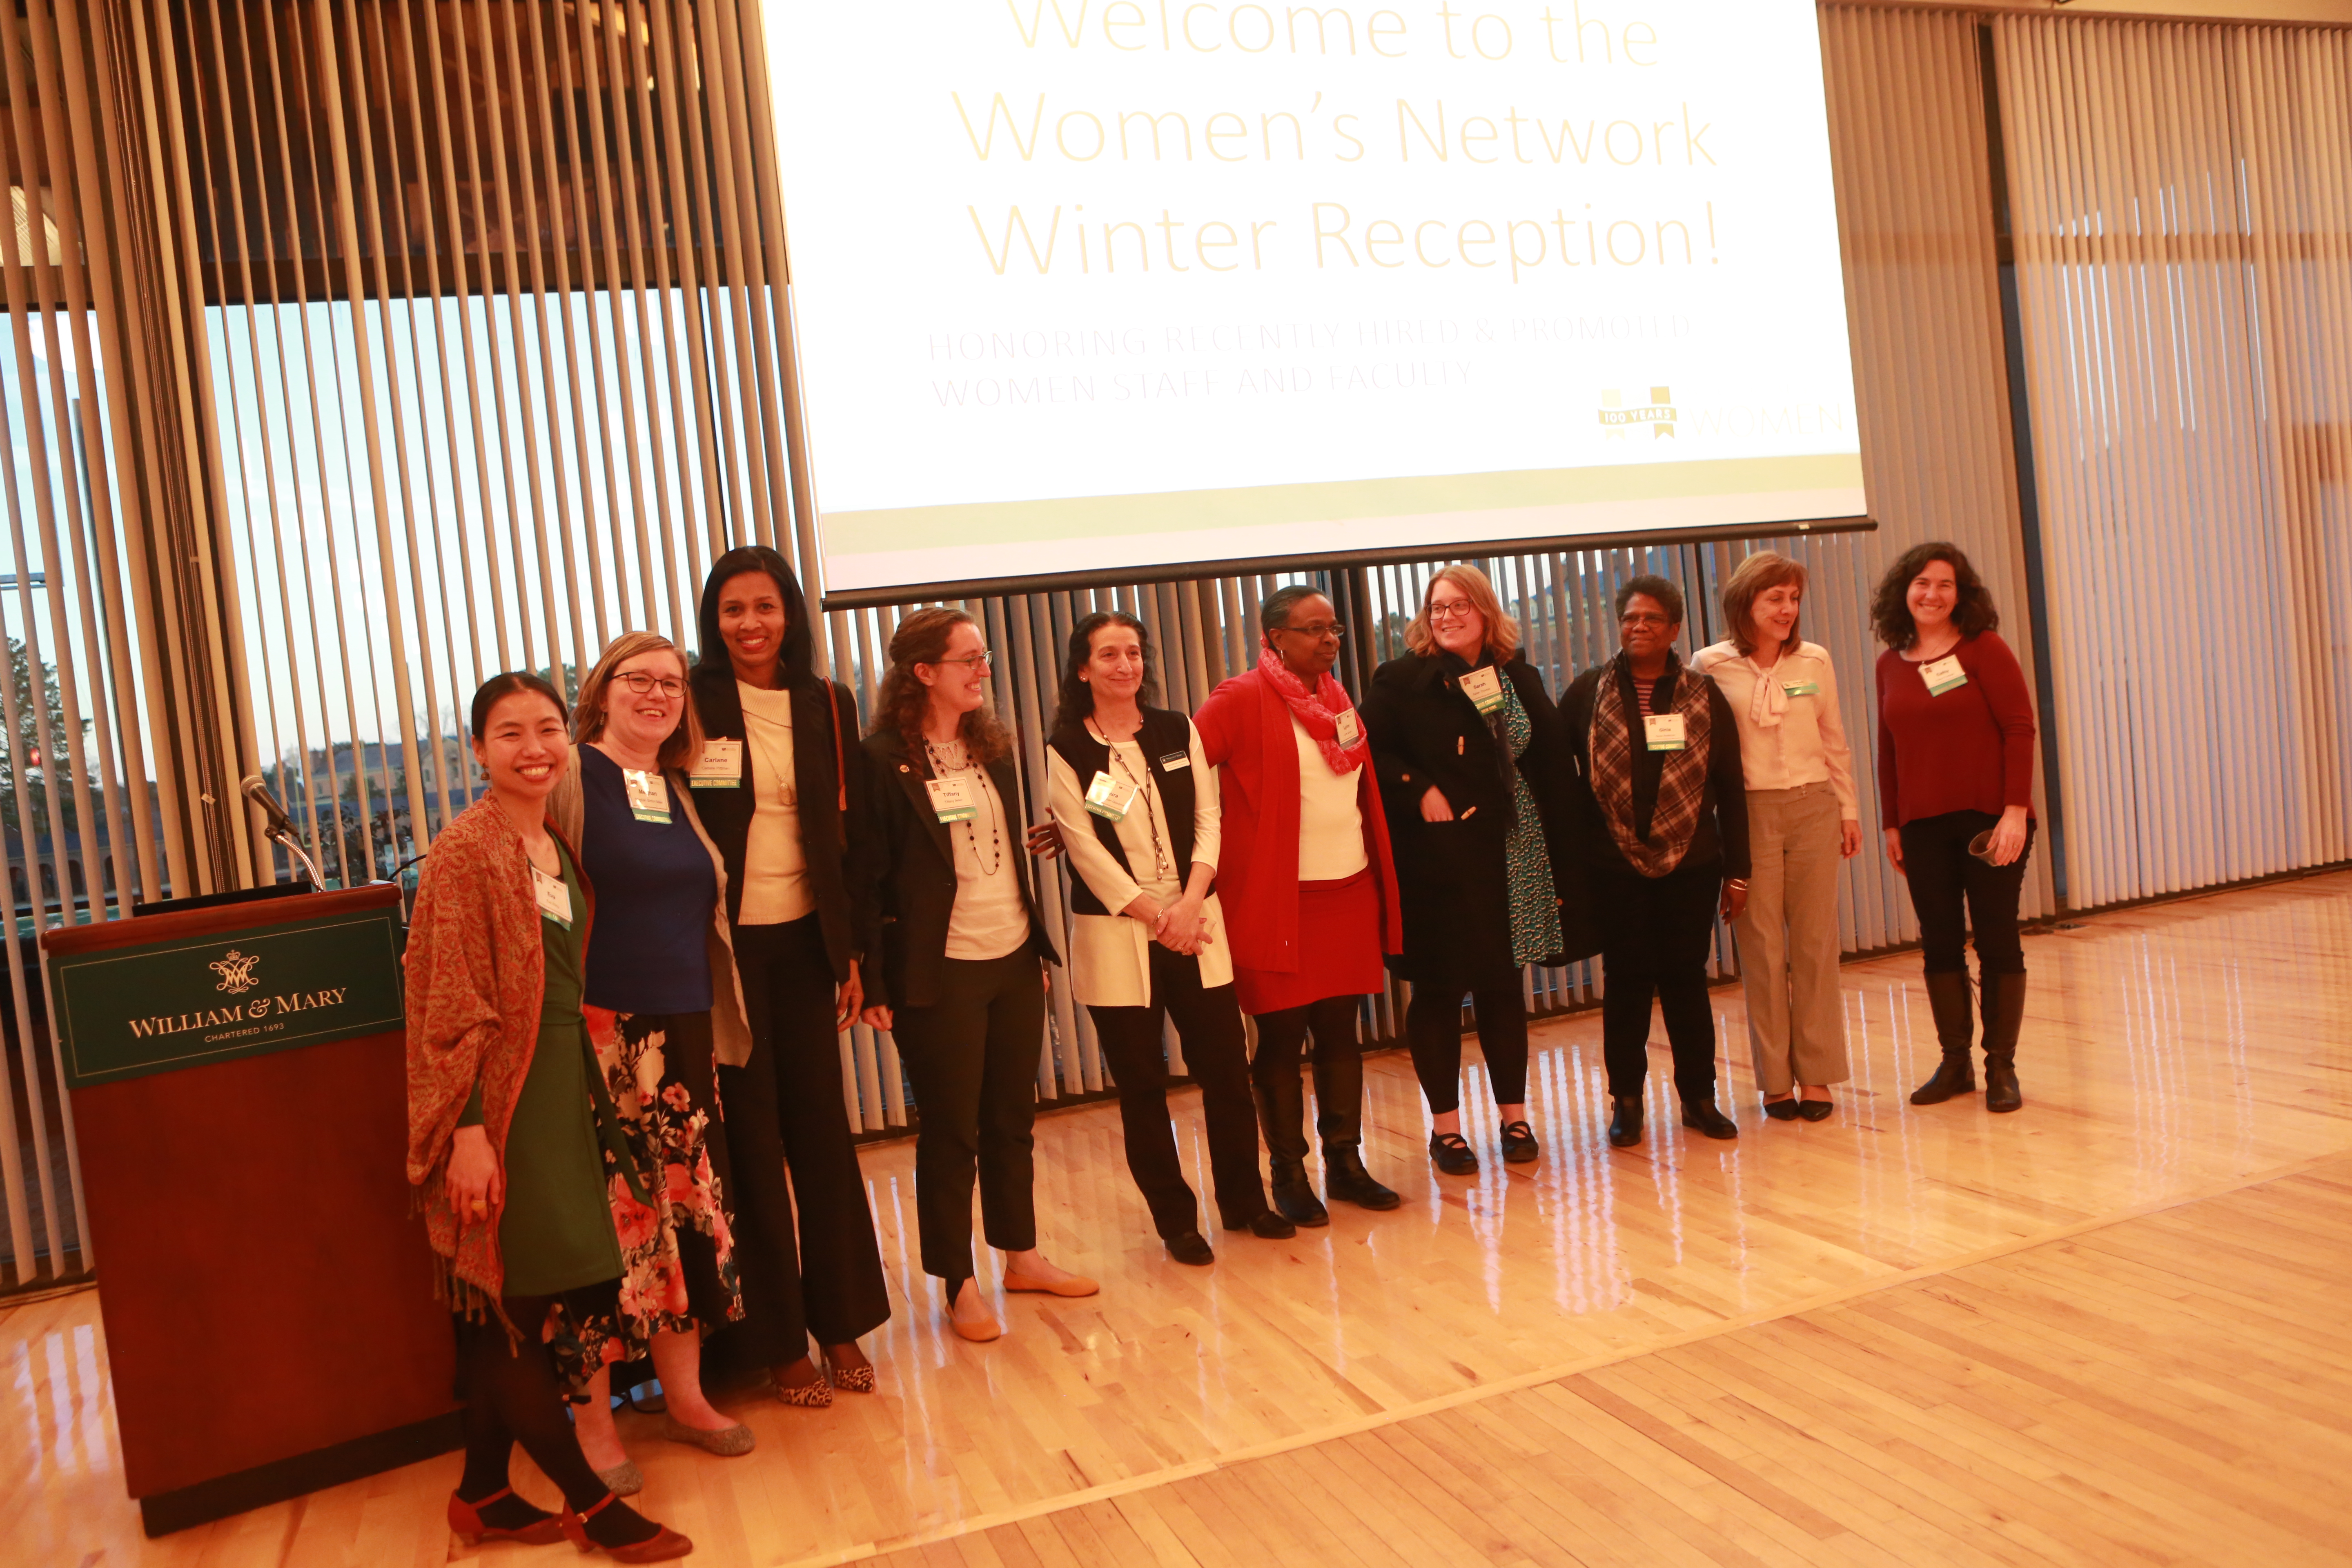 Women's Network Spring 2019 Reception